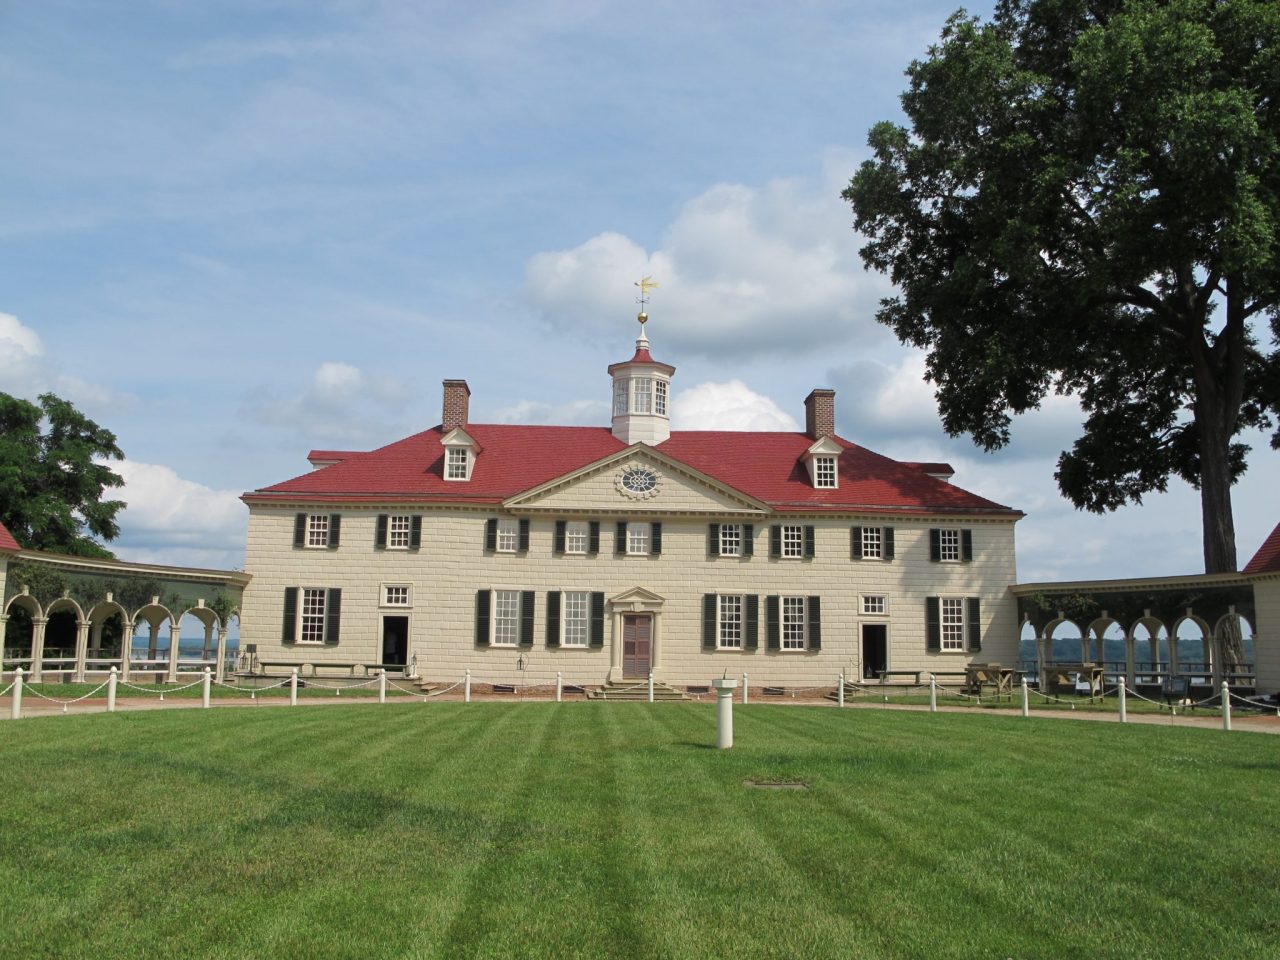 George Washington's estate in Mount Vernon, VA